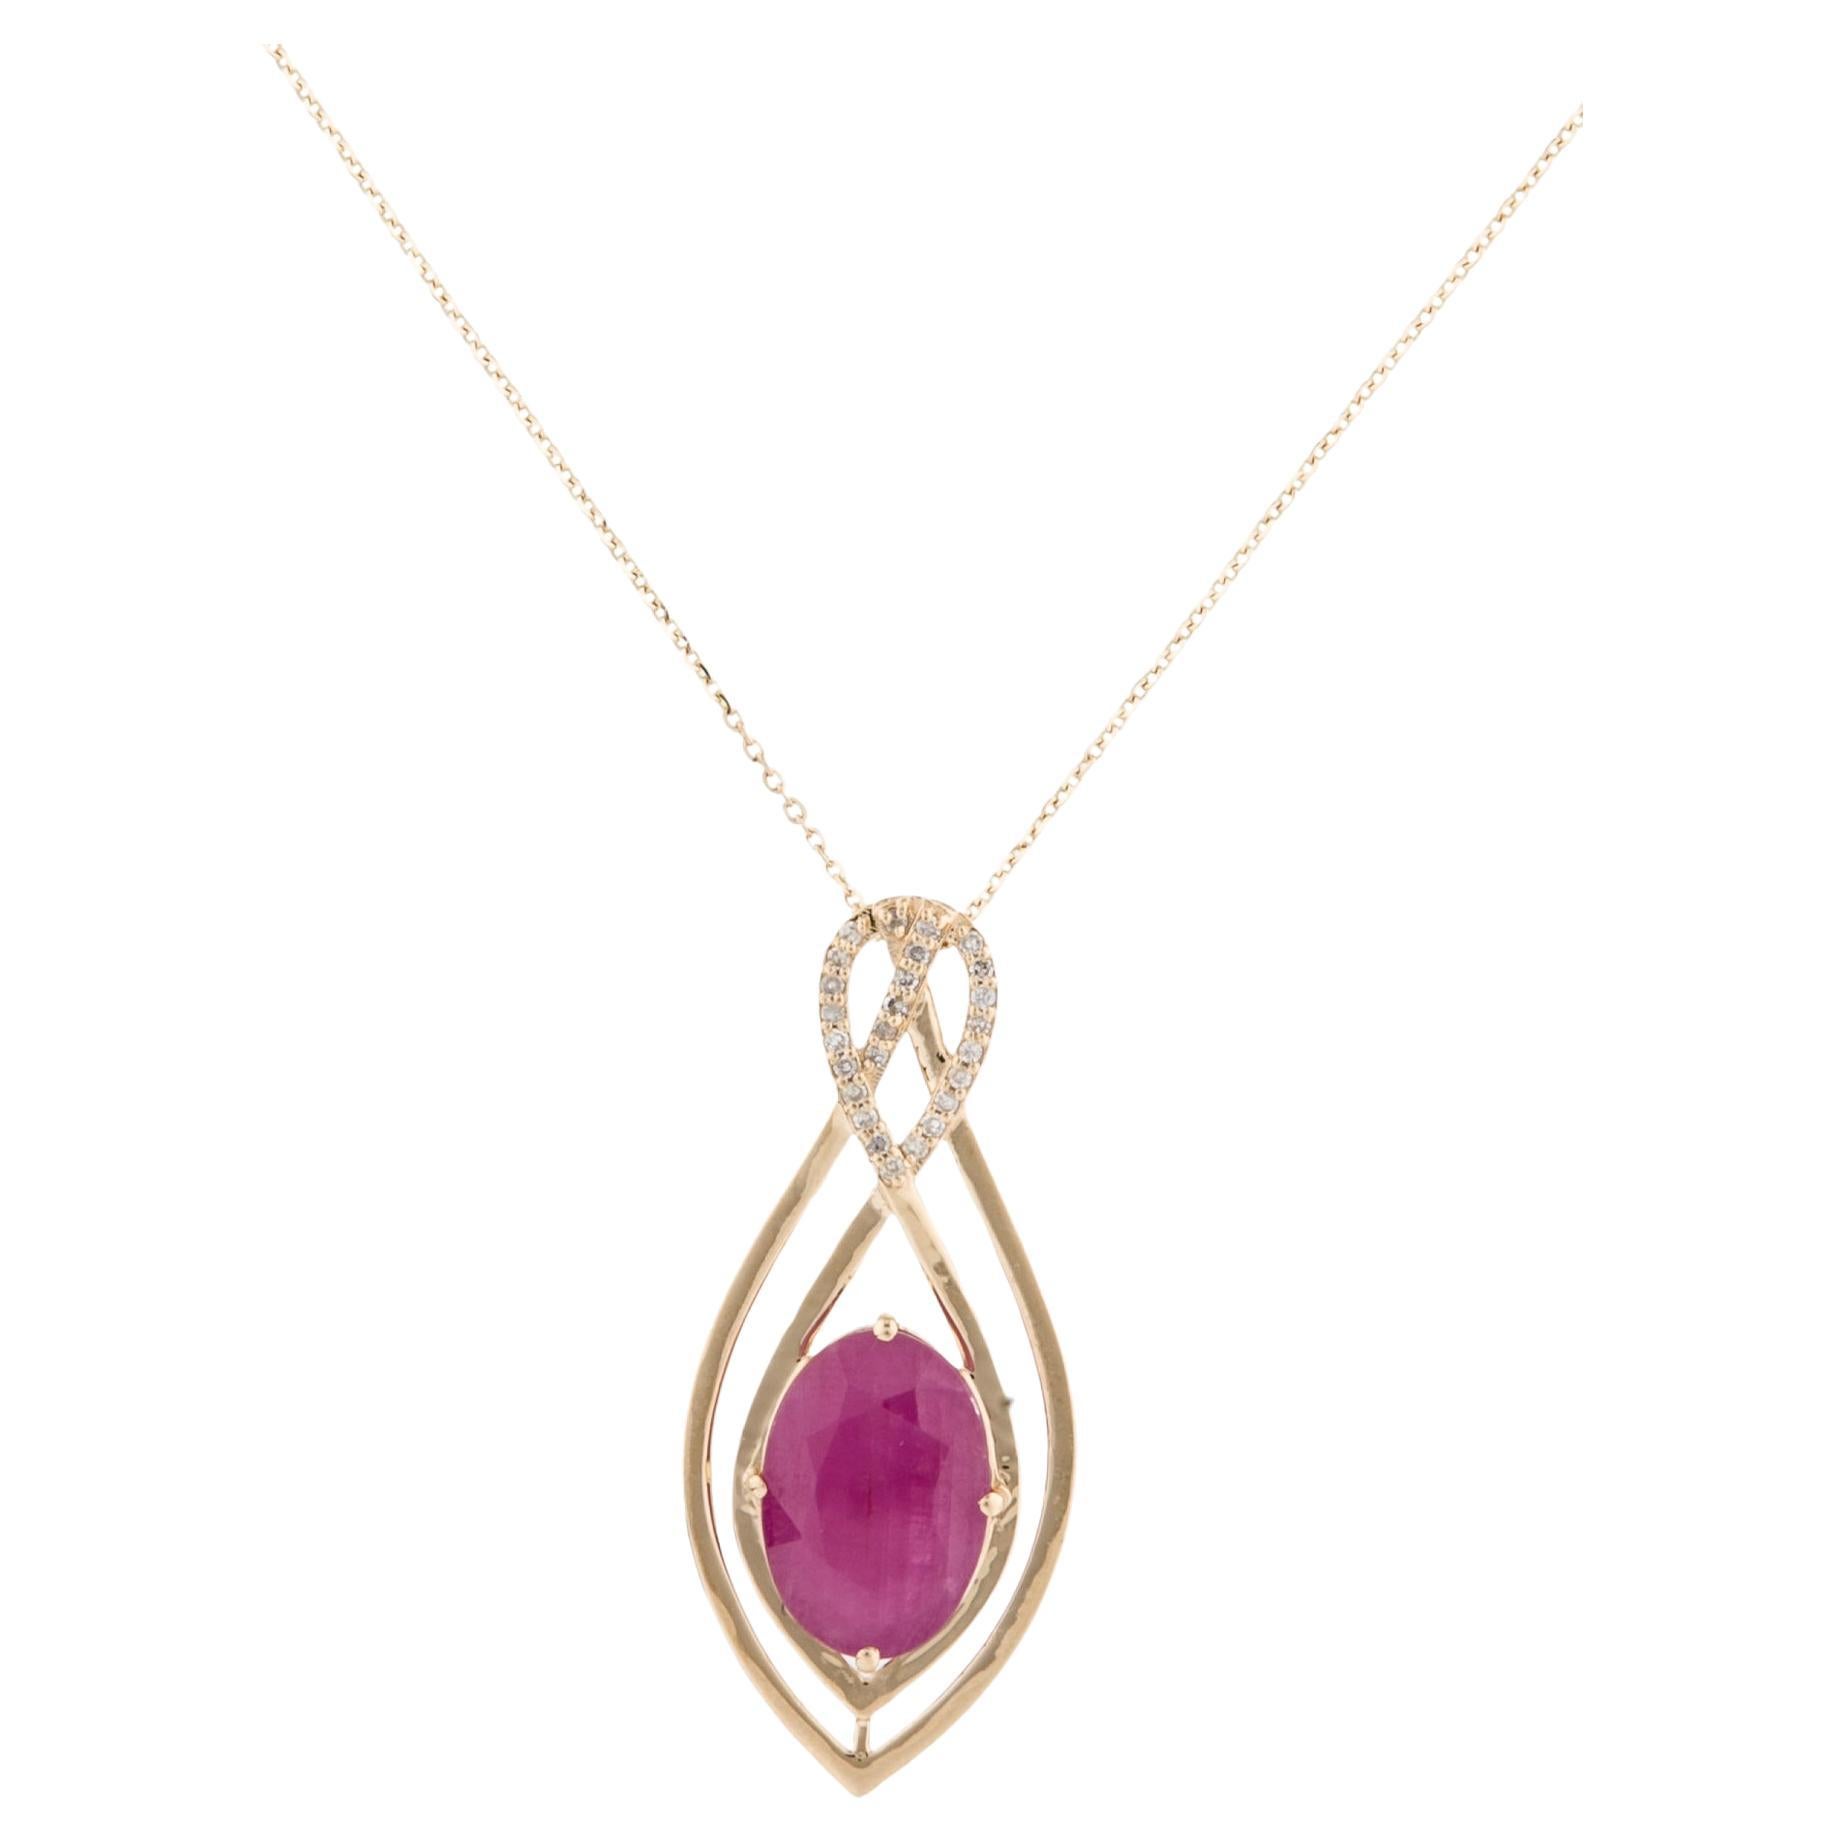 Exquisite 14K Ruby & Diamond Pendant Necklace  4.07ct Gemstone Sparkle